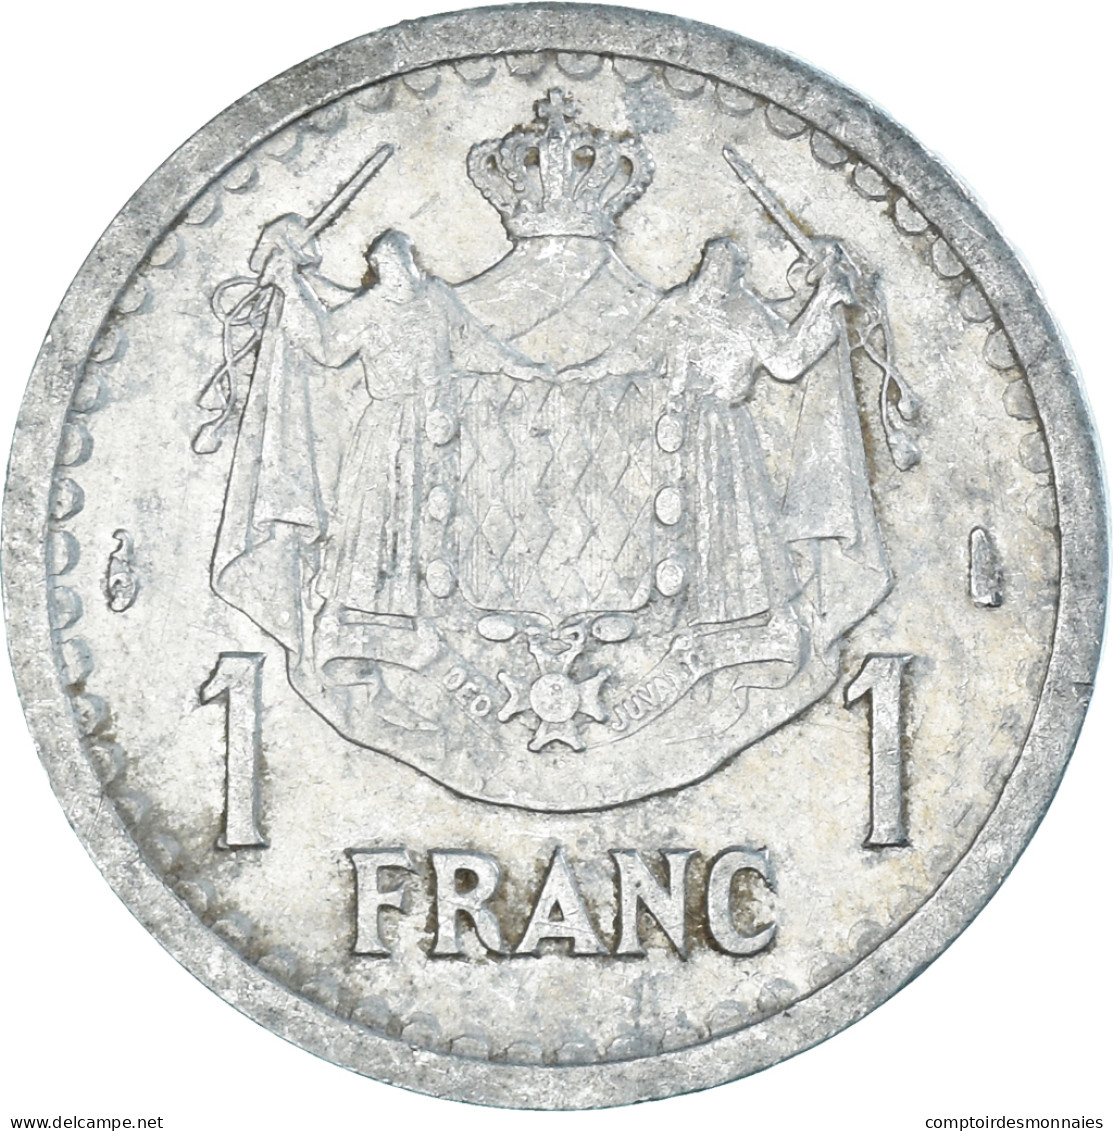 Monnaie, Monaco, Franc, 1943 - 1922-1949 Louis II